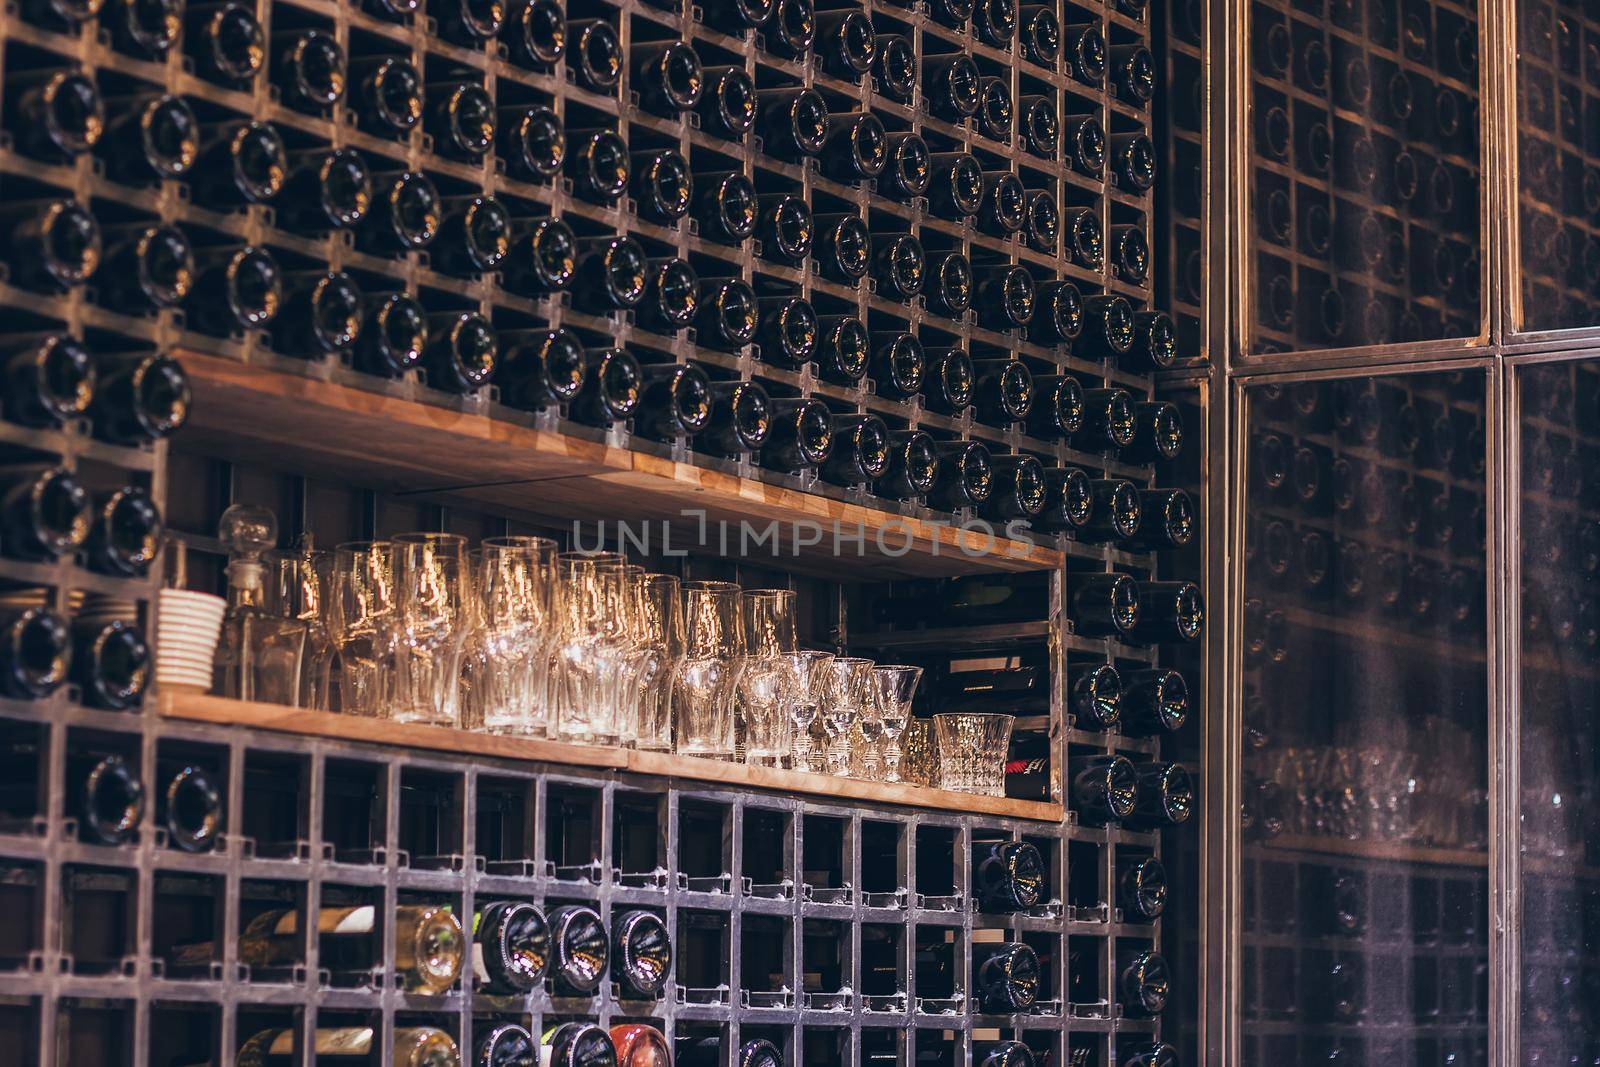 Closeup shot of wine shelf. Bottles lay over straw. Wine cellar